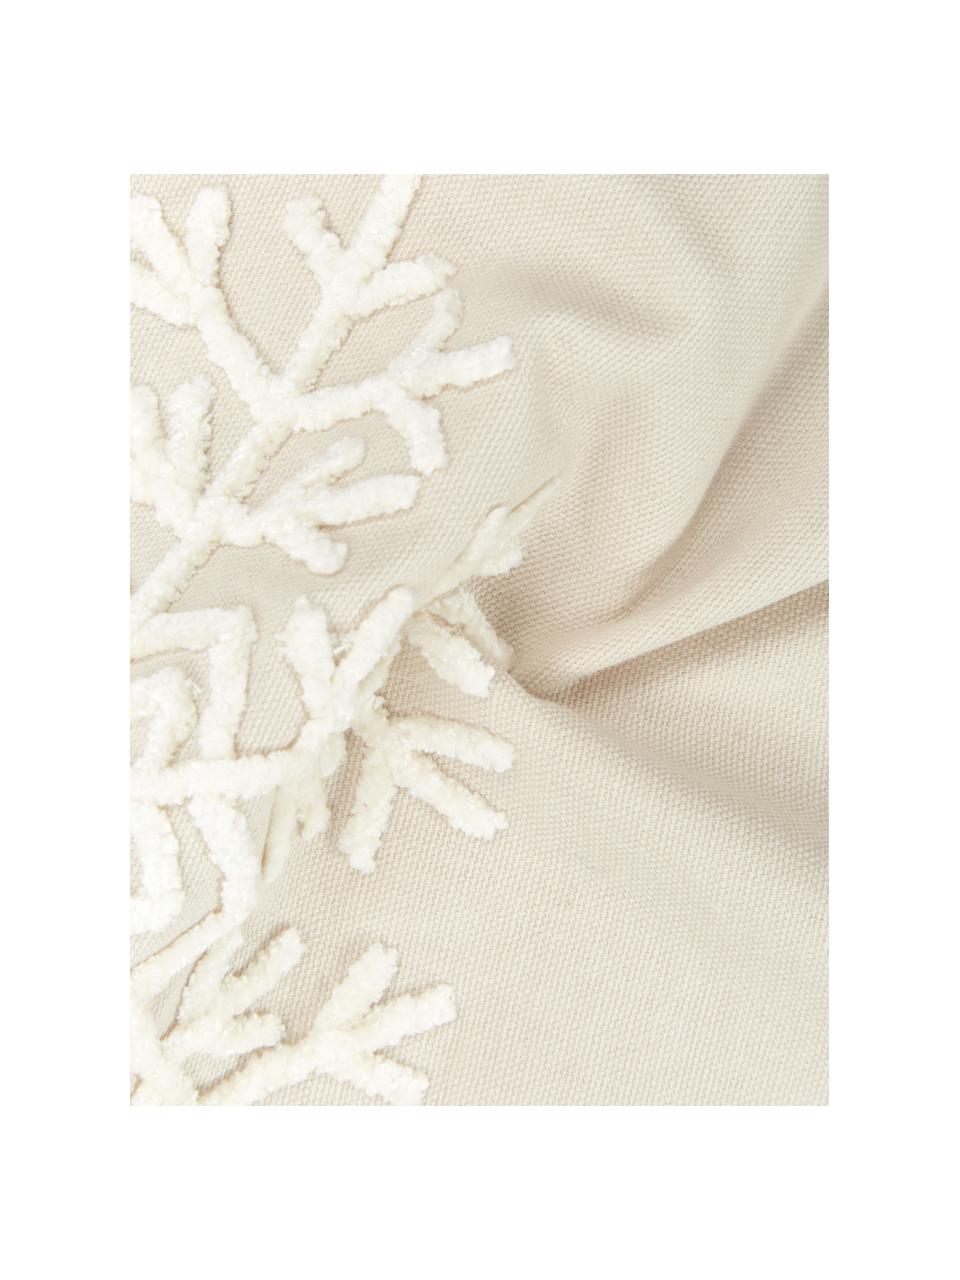 Federa arredo ricamata color beige Snowflake, 100% cotone, Beige, bianco crema, Larg. 45 x Lung. 45 cm